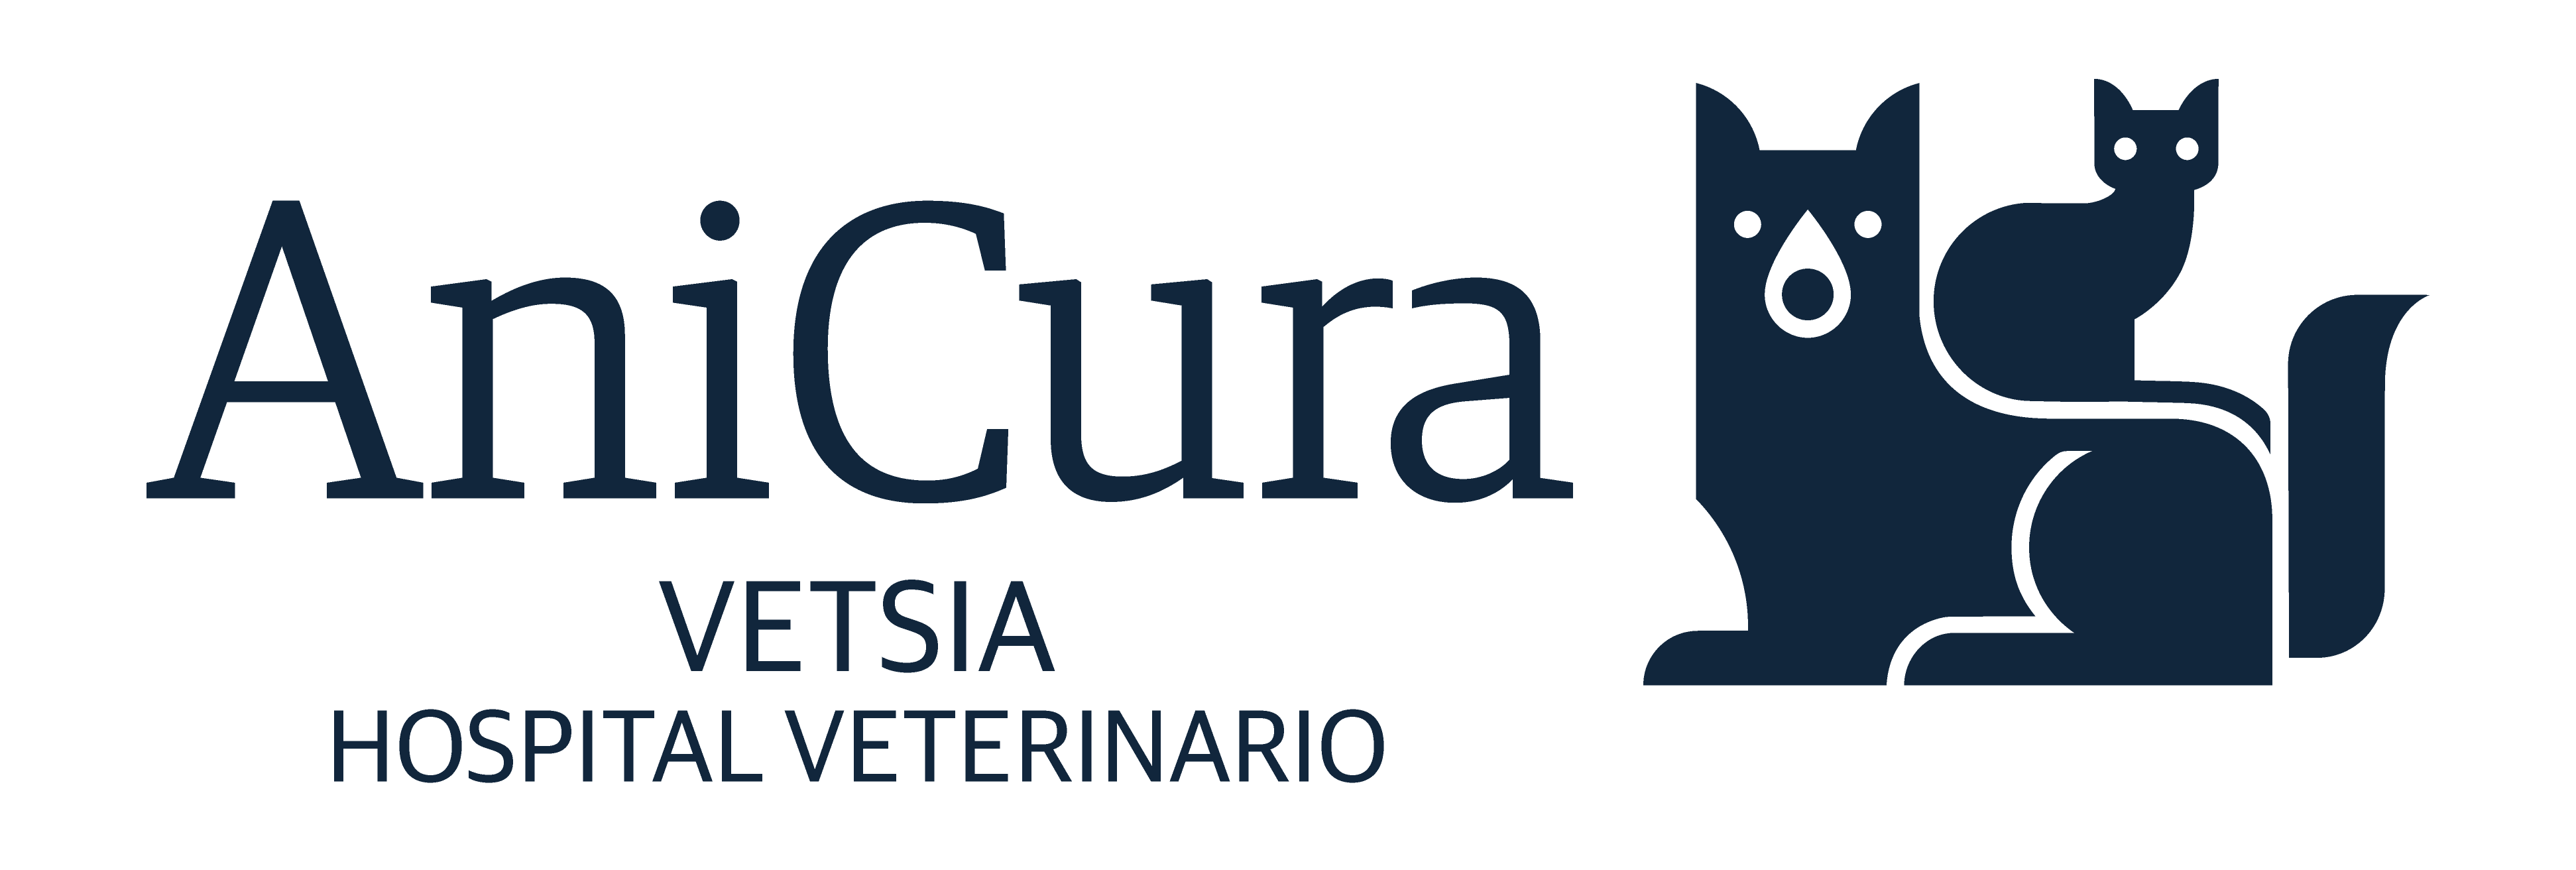 AniCura Vetsia Hospital Veterinario logo